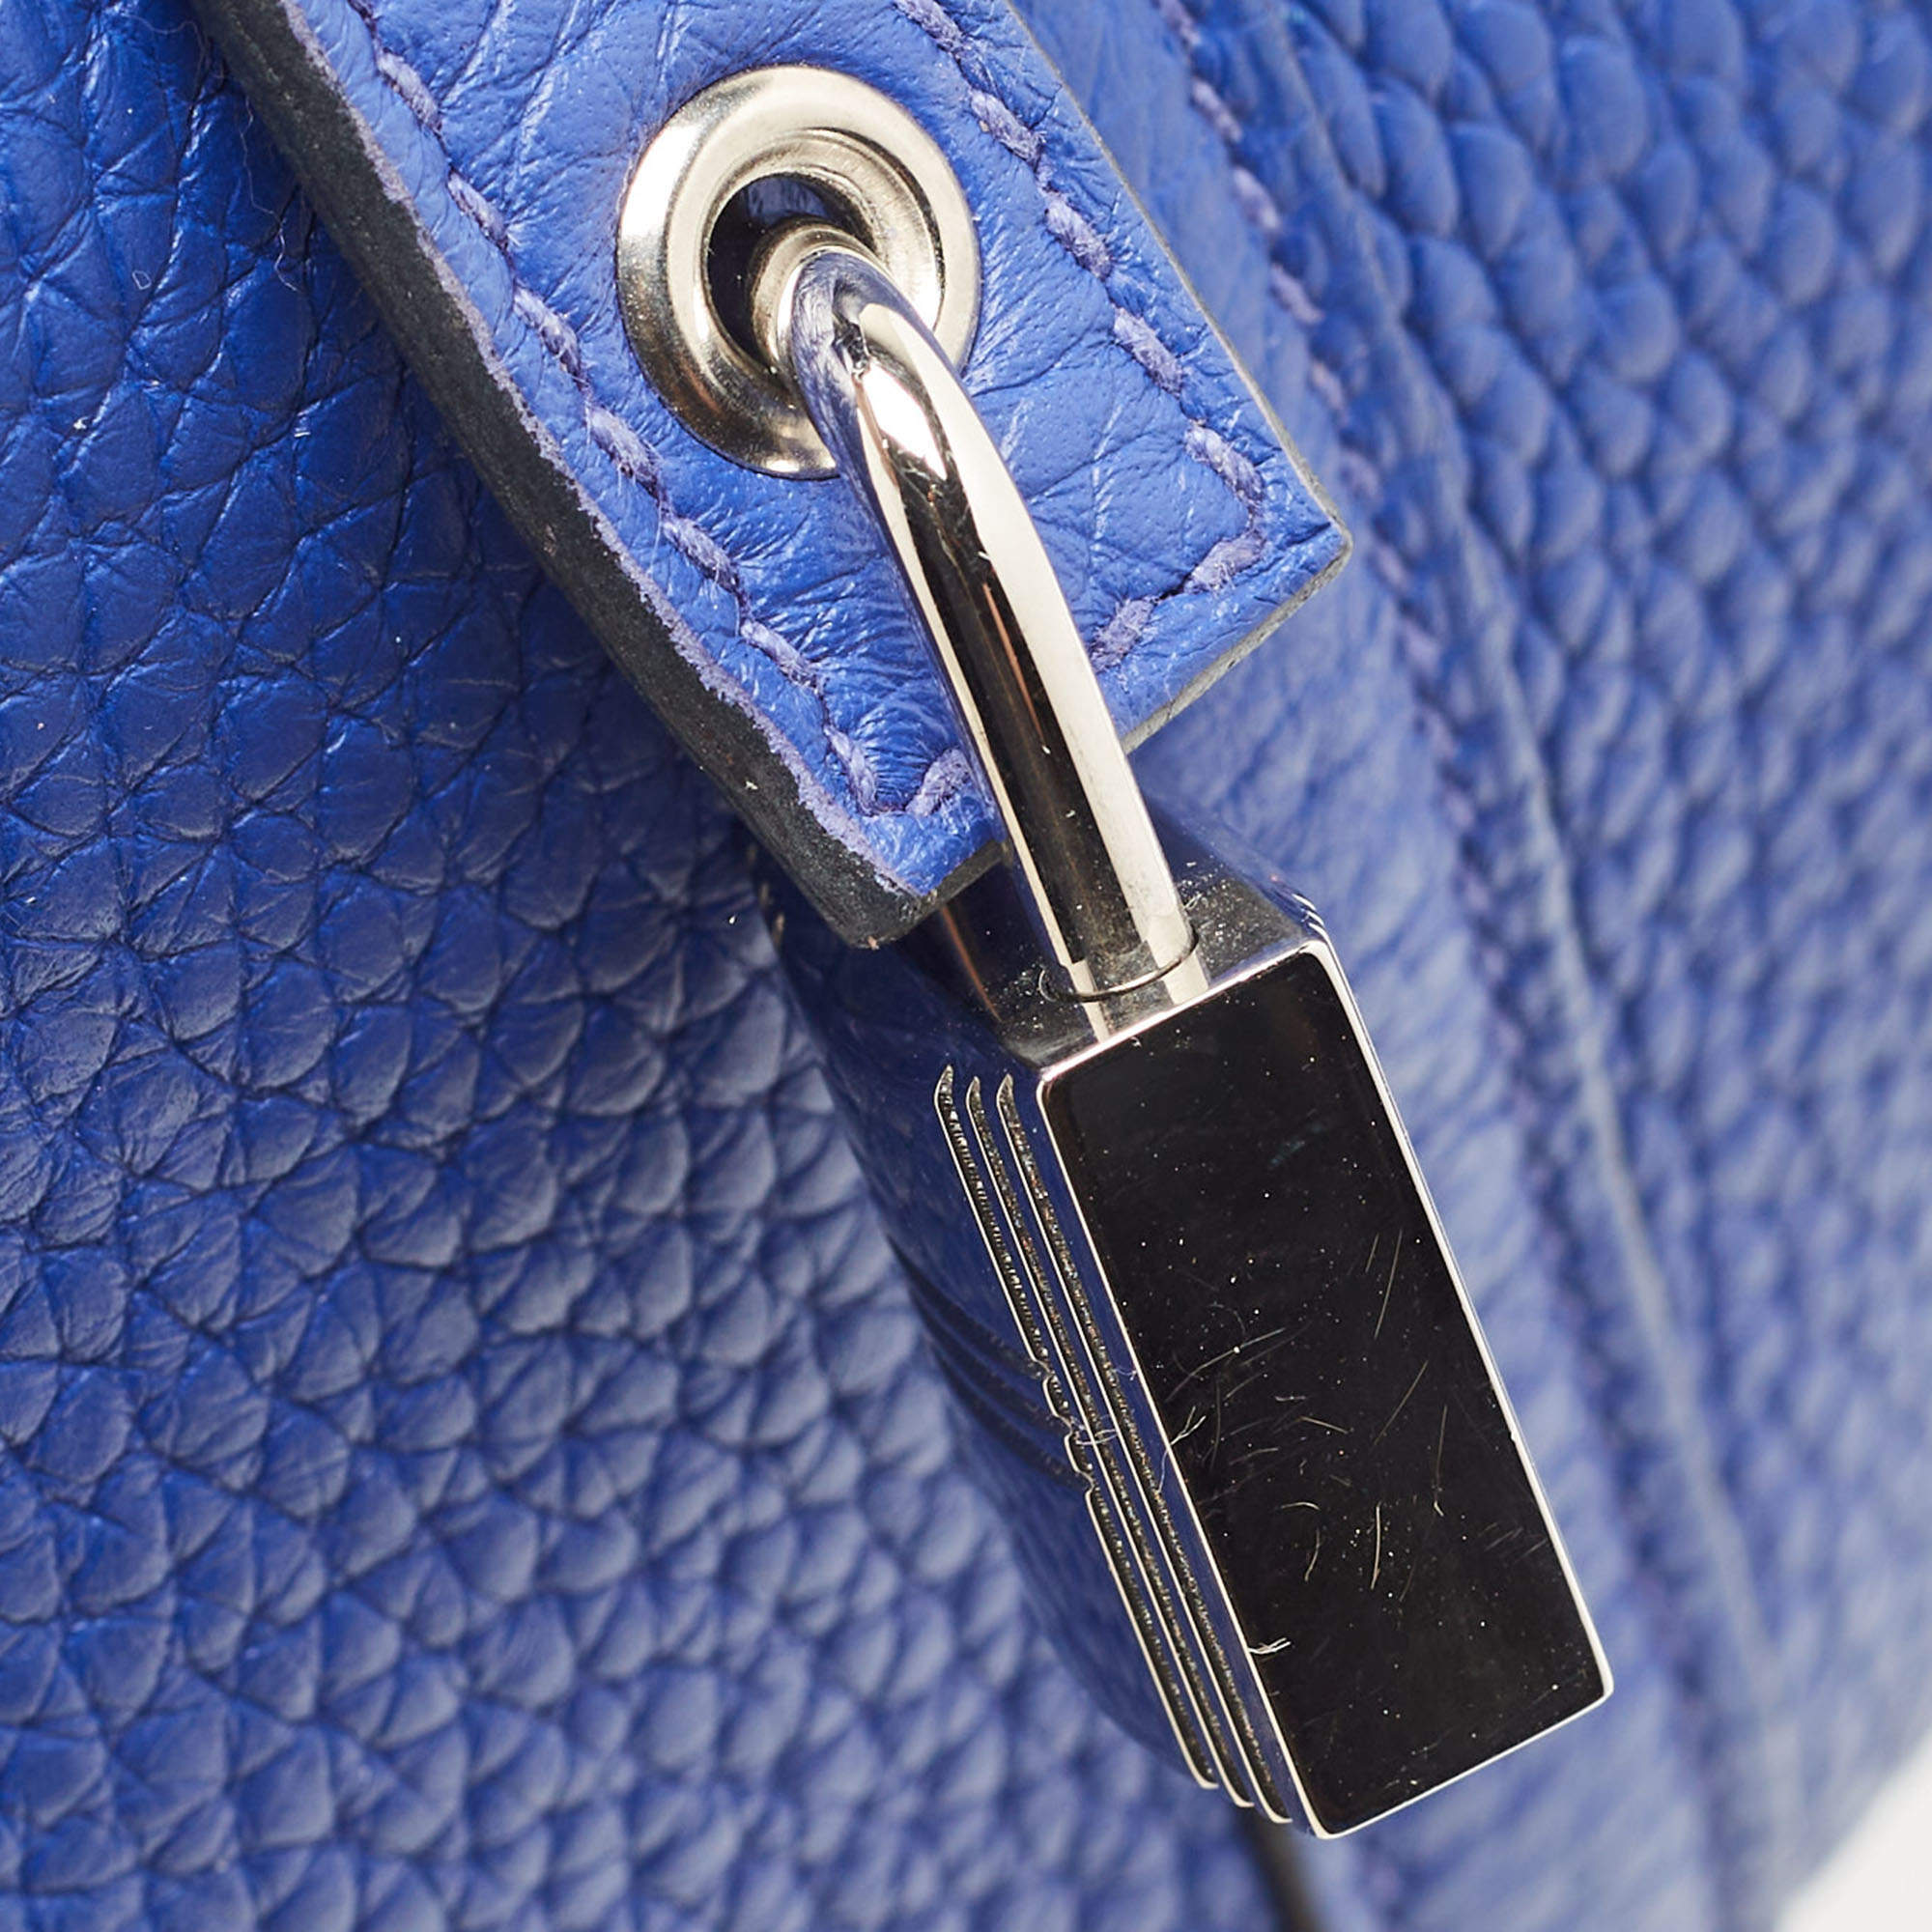 Hermès 'Picotin Lock TGM' Bag in Blue Clemence Leather - Hermès